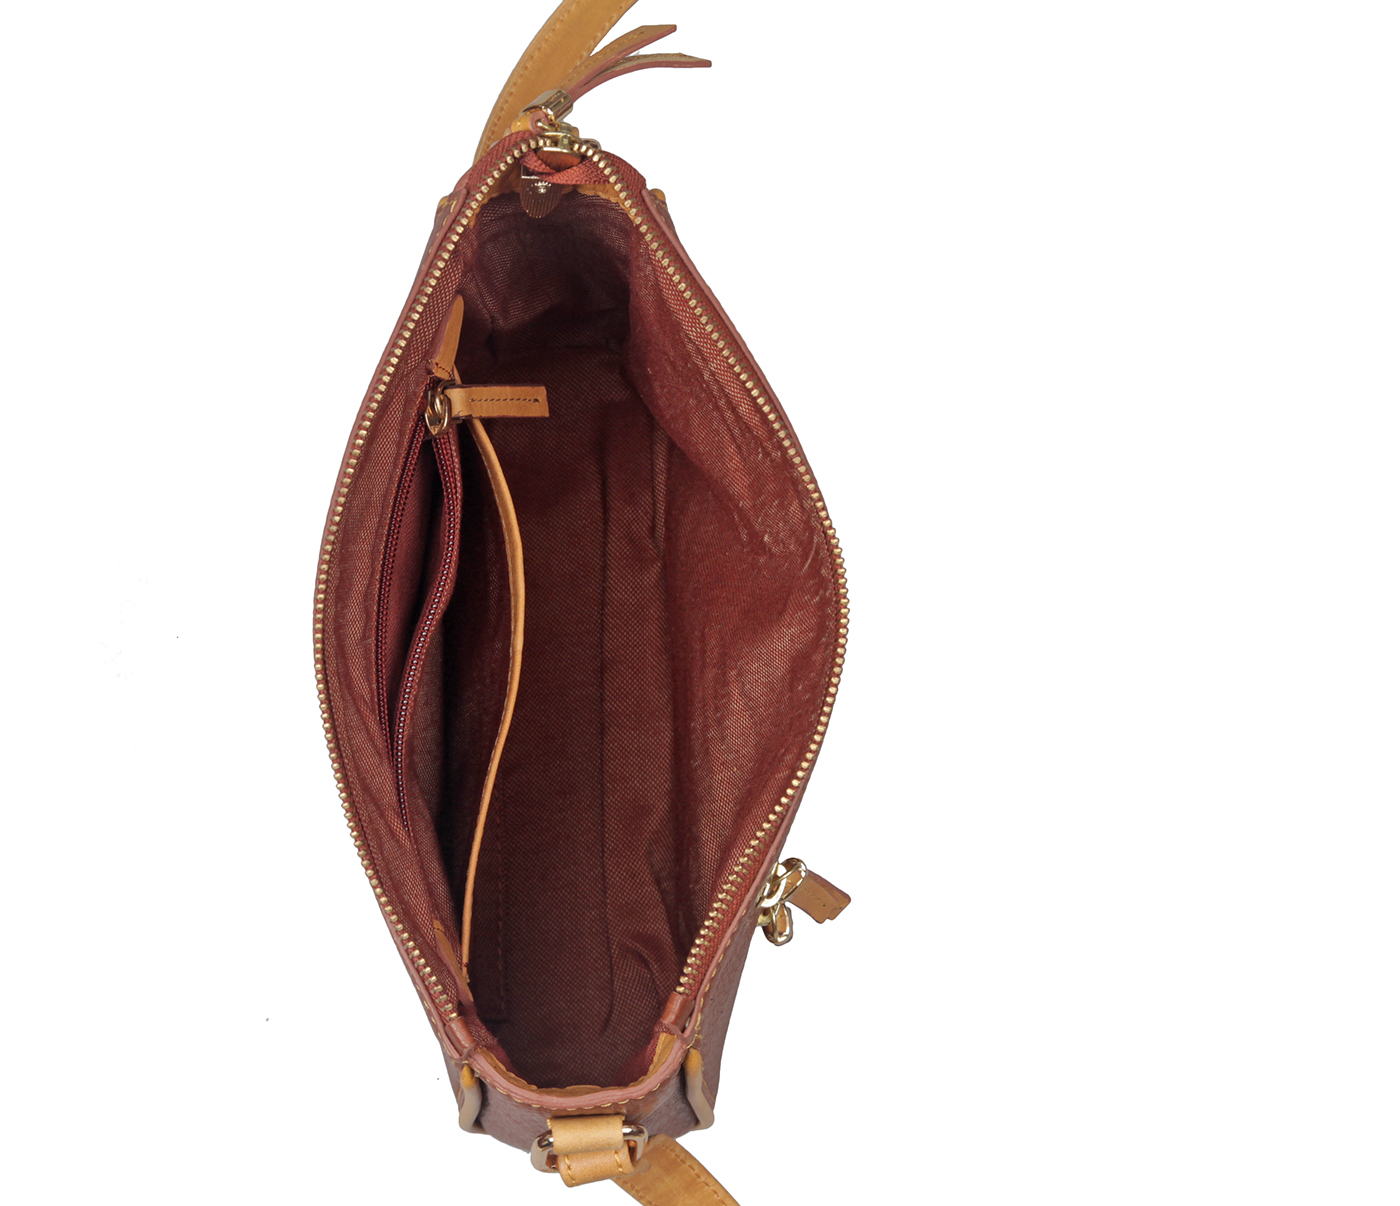 B825-Alissa-Sling cross body bag in Genuine Leather - Tan